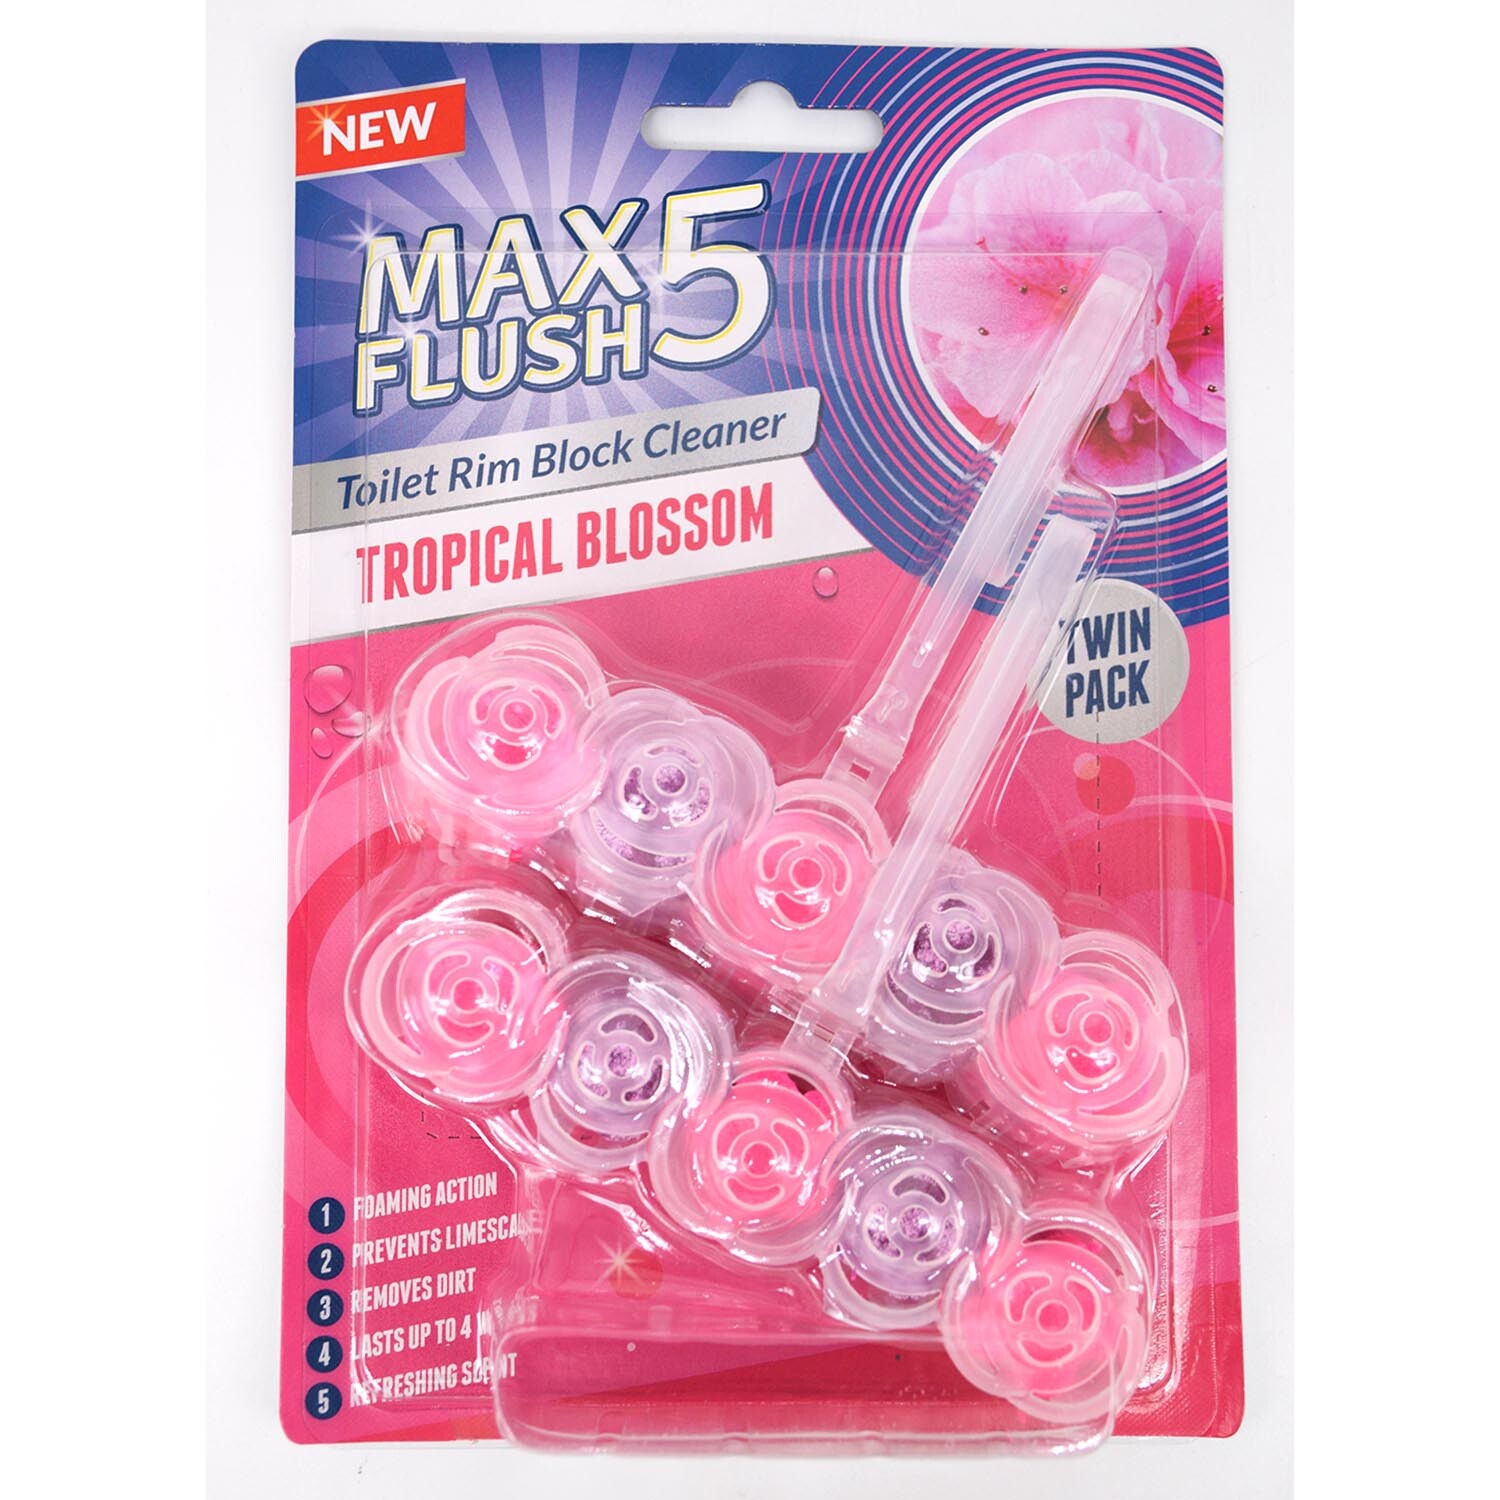 Max Flush Toilet Rim Block Cleaner - Tropical Blossom Image